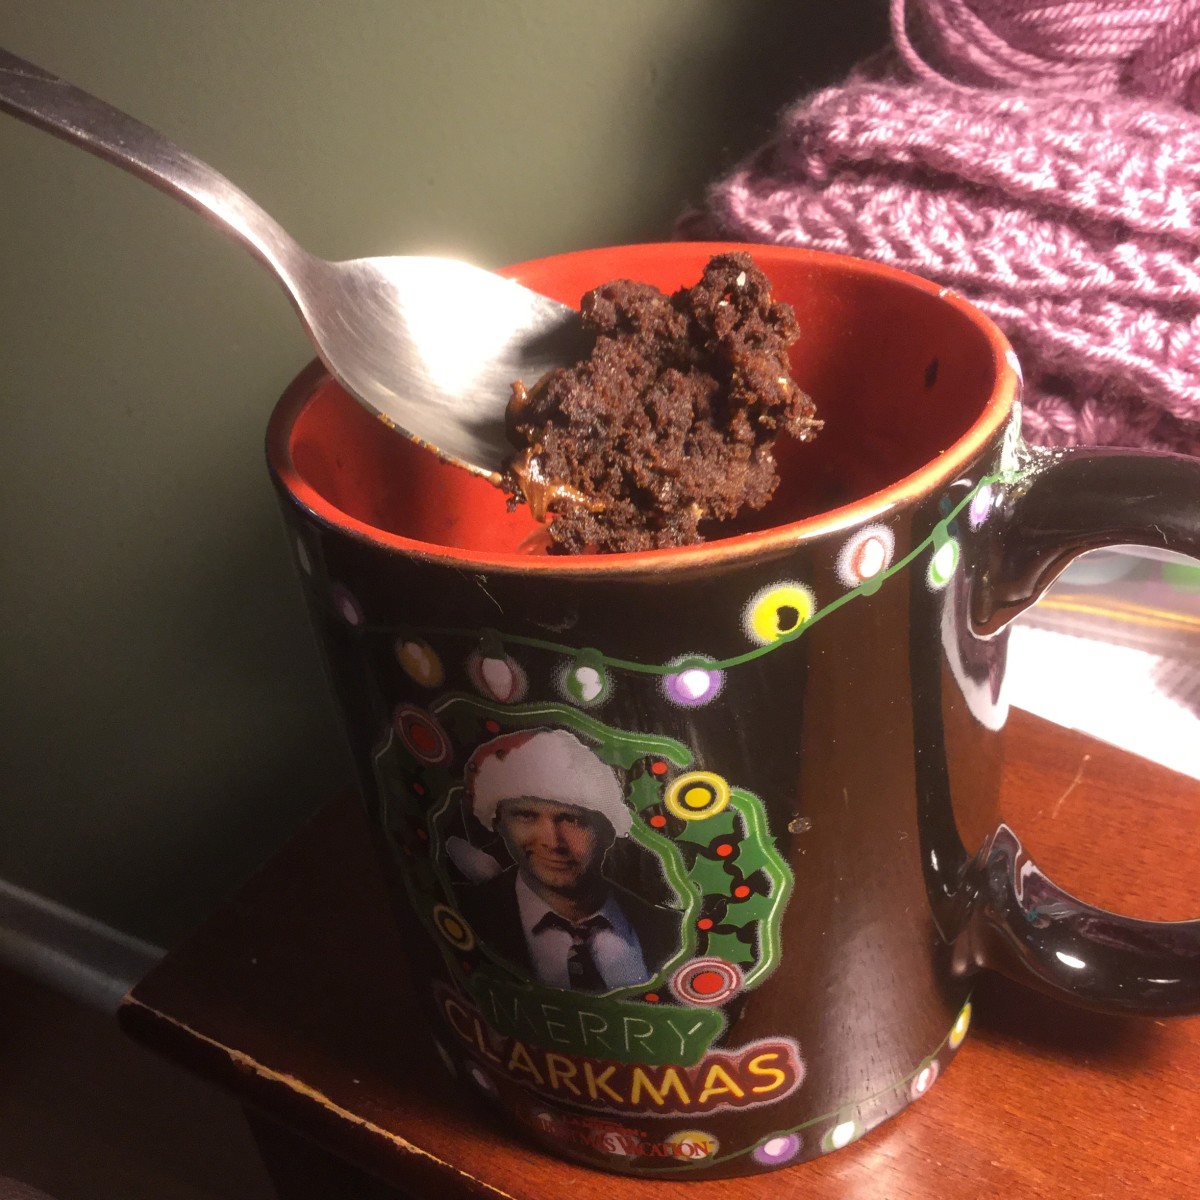 Vegan chocolate mug cake in my Merry Clarkmas mug!